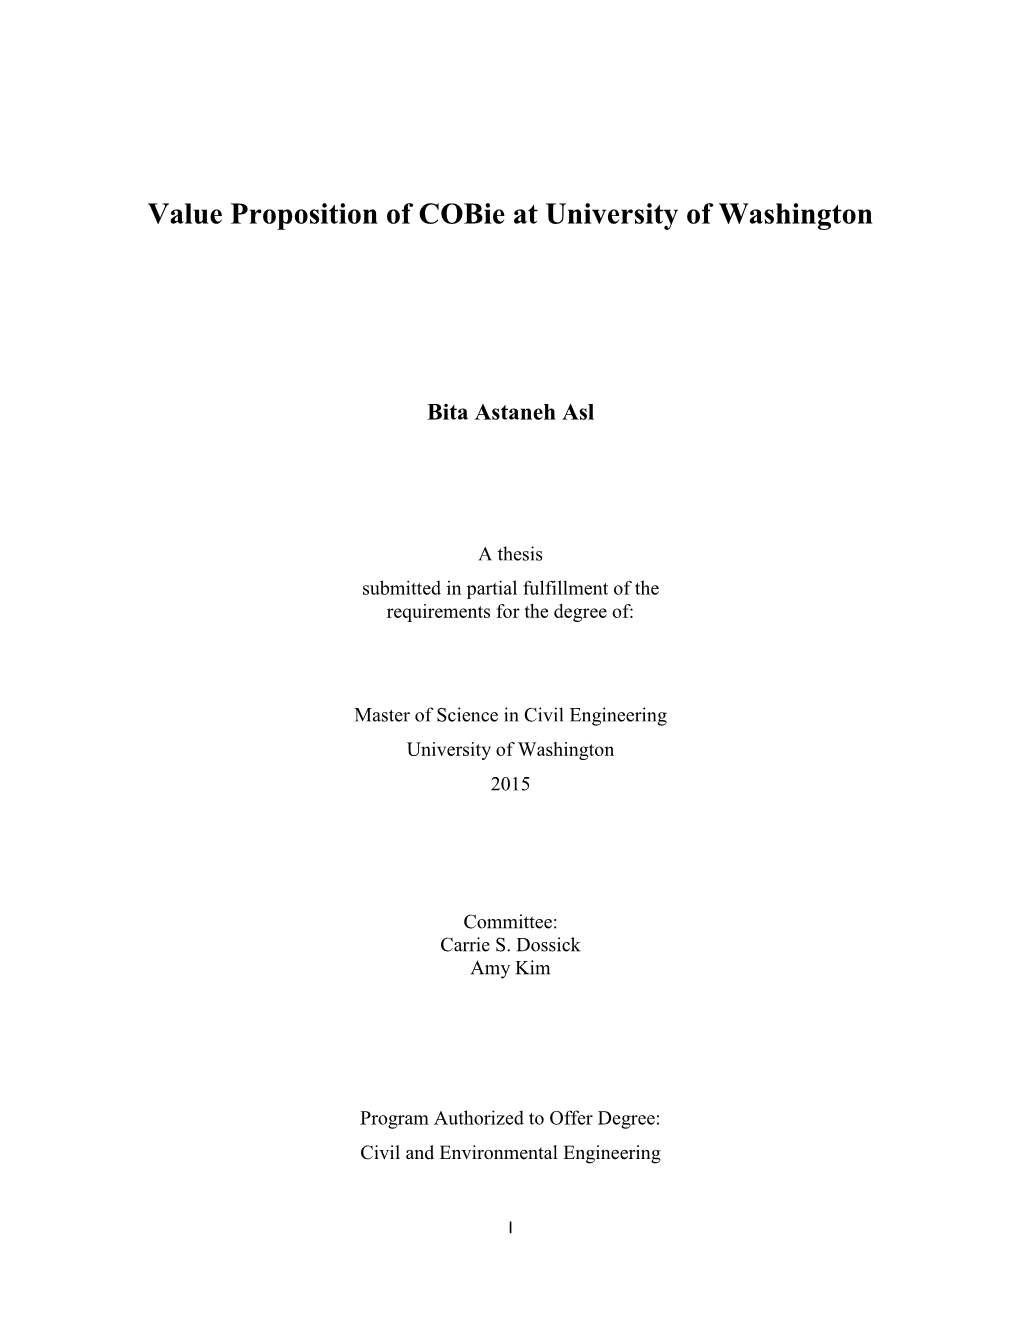 Value Proposition of Cobie at University of Washington